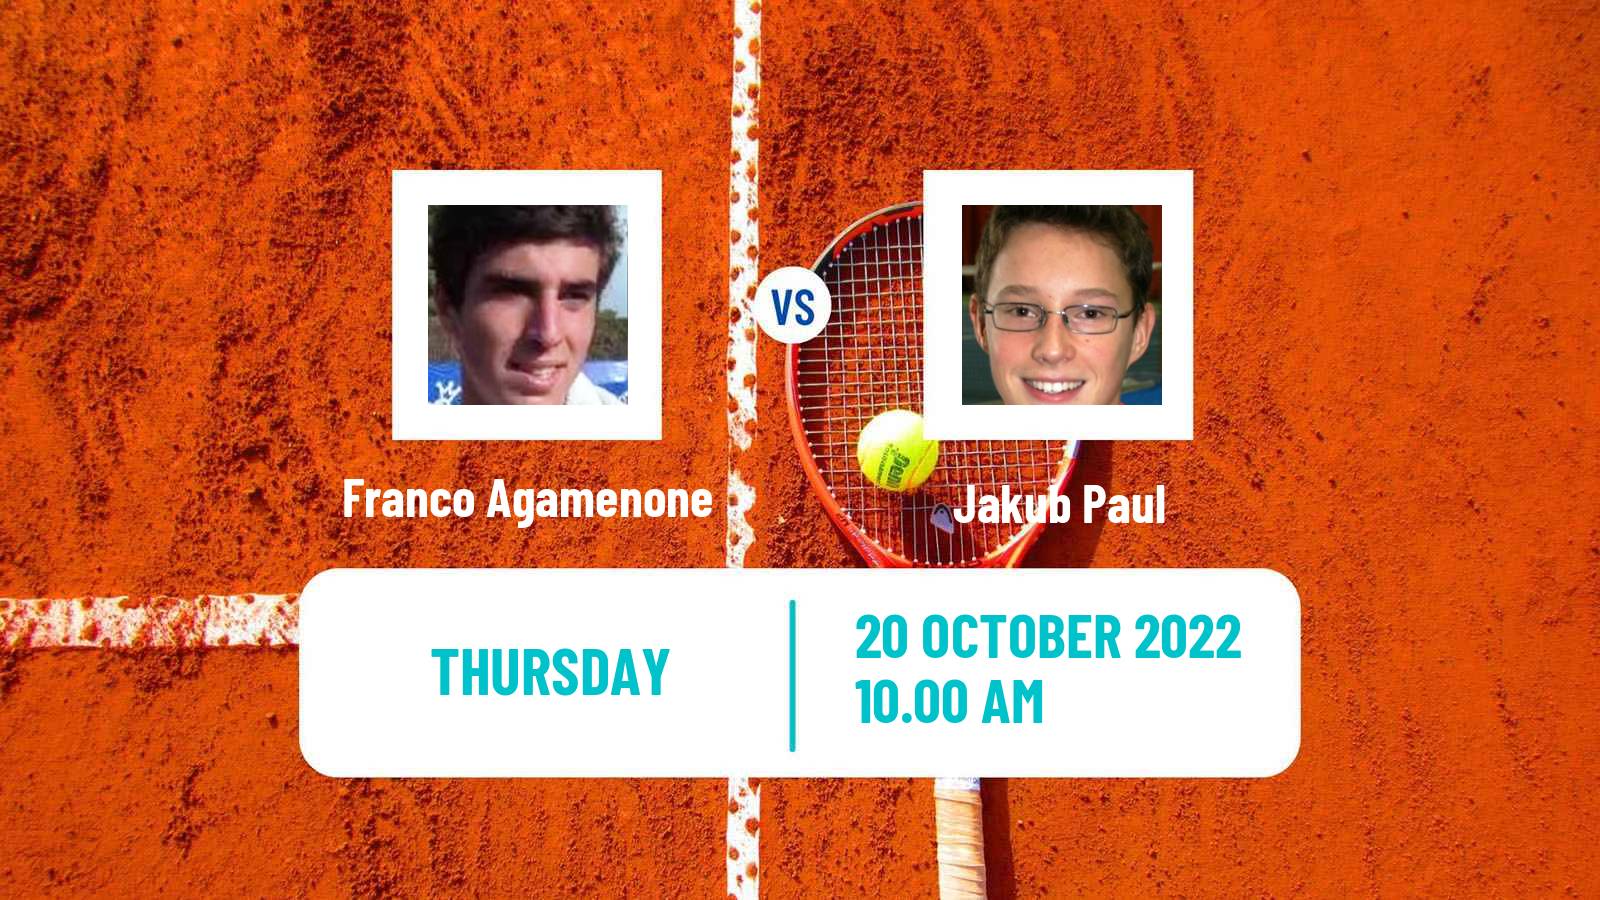 Tennis ATP Challenger Franco Agamenone - Jakub Paul